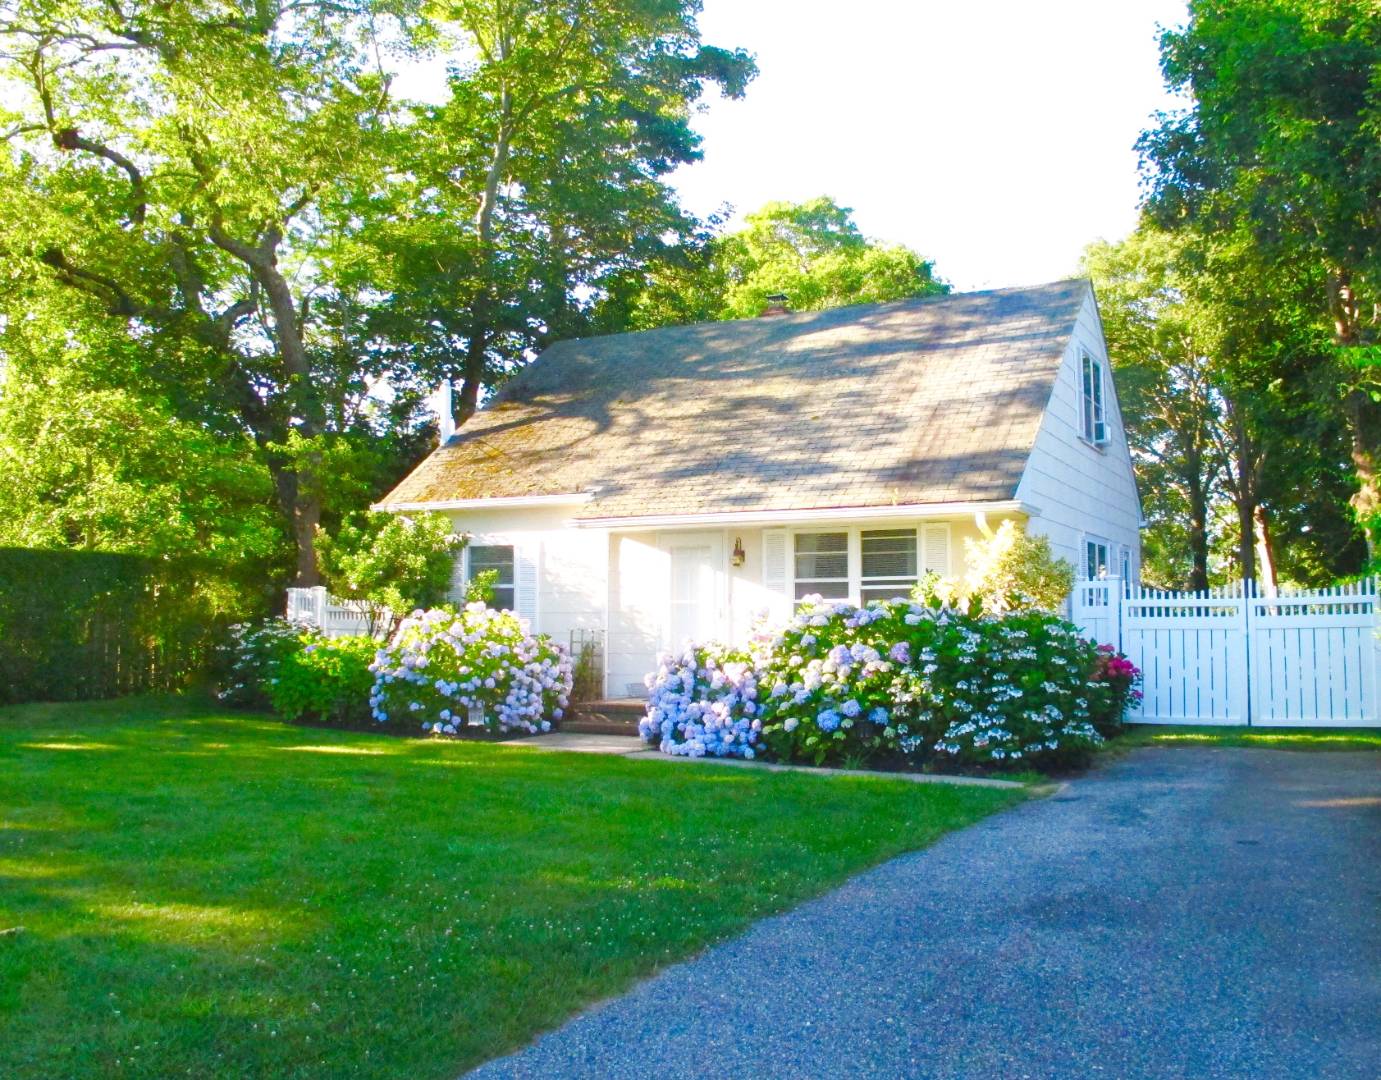 Rental Property at Village Of Southampton, Village Of Southampton, Hamptons, NY - Bedrooms: 4 
Bathrooms: 2  - $28,000 MO.